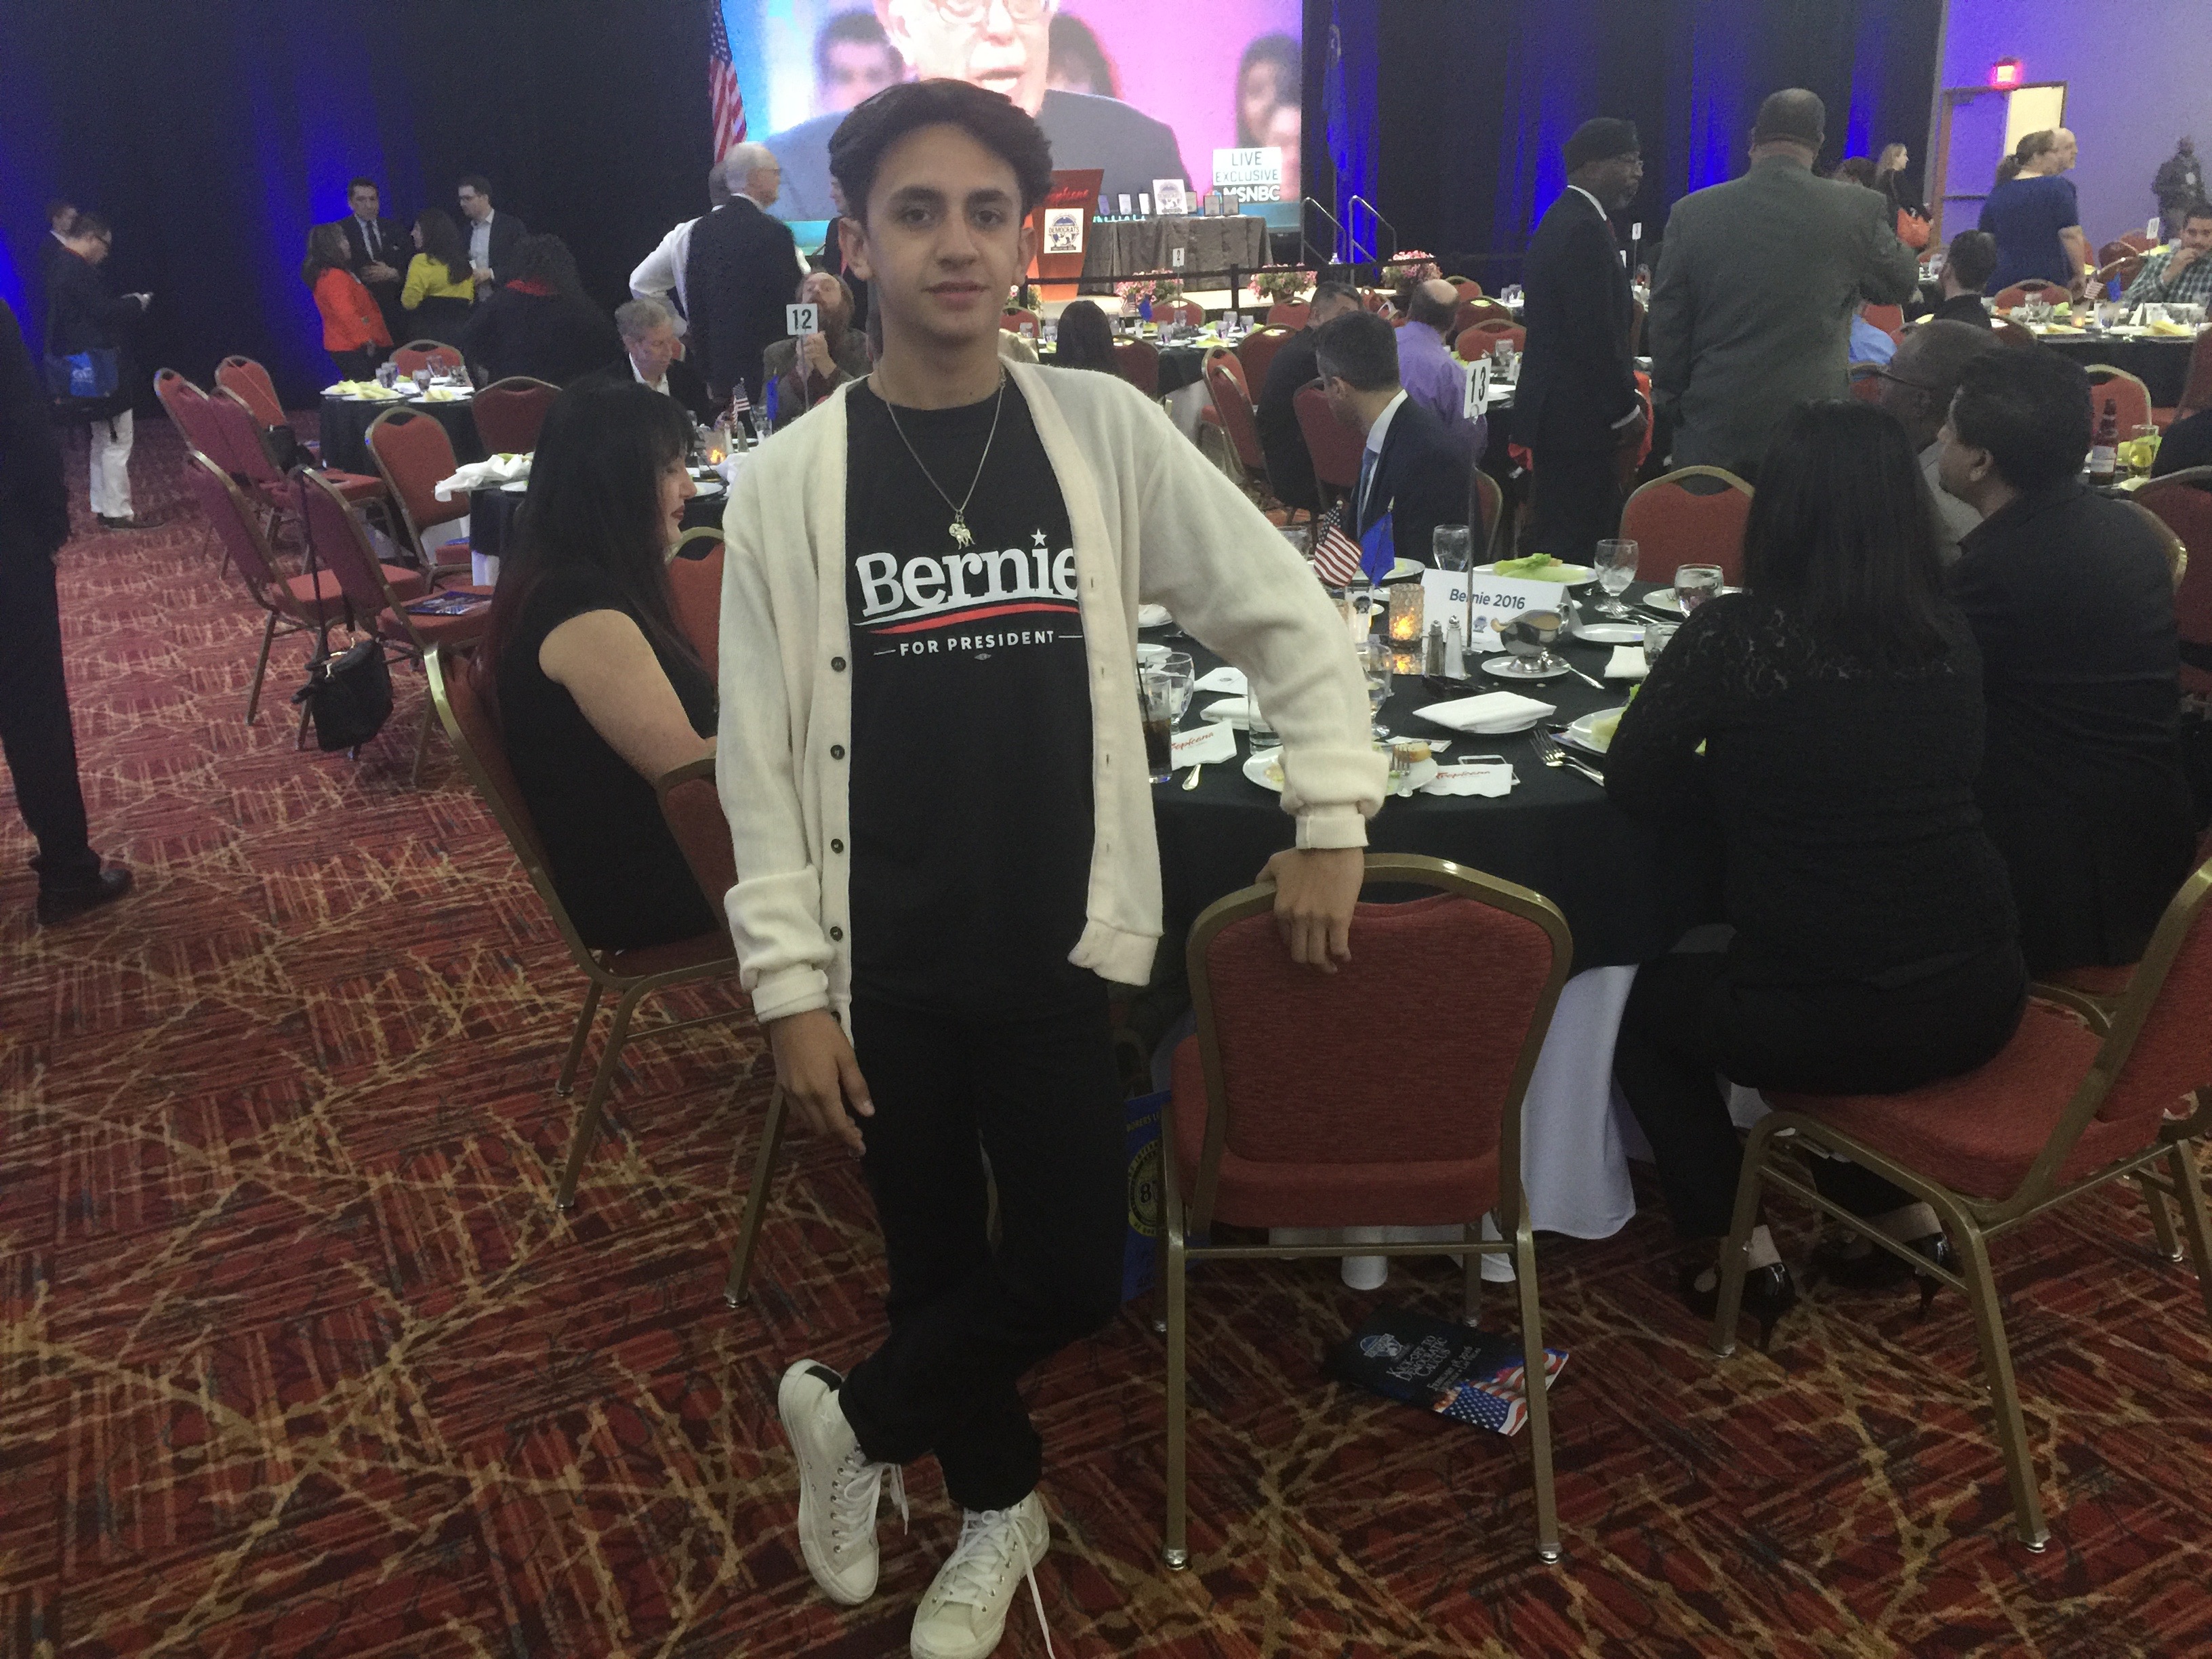 Pedro Duran, a DREAMer campaigning for Bernie Sanders in Nevada